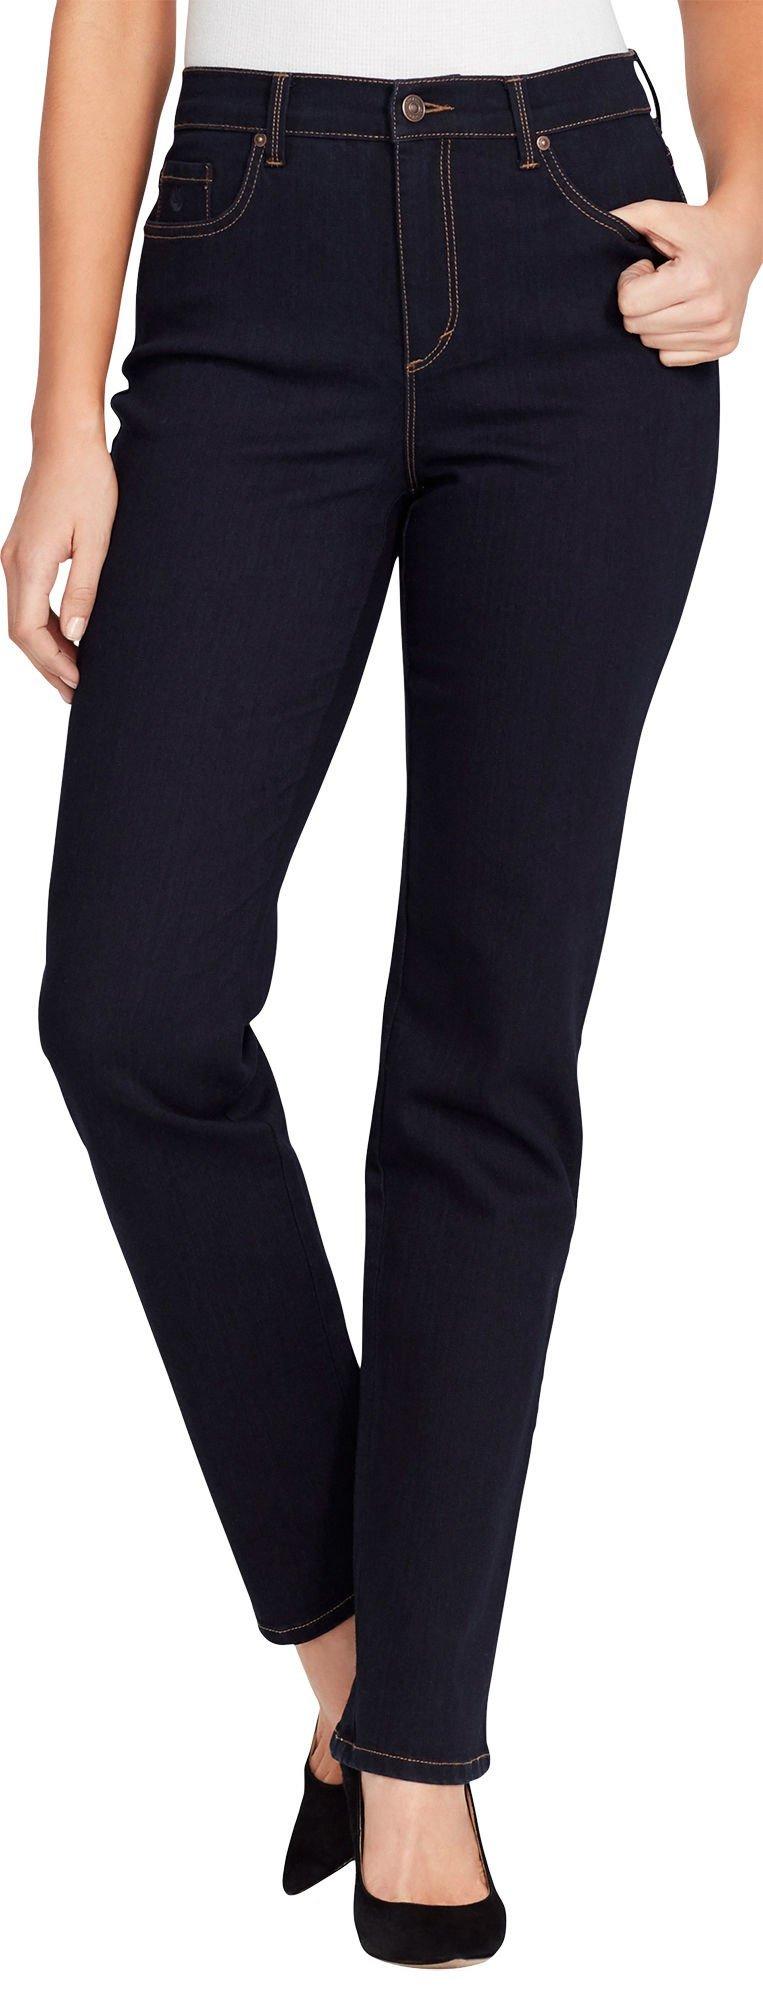 Gloria Vanderbilt Womens Amanda Classic Denim Jeans